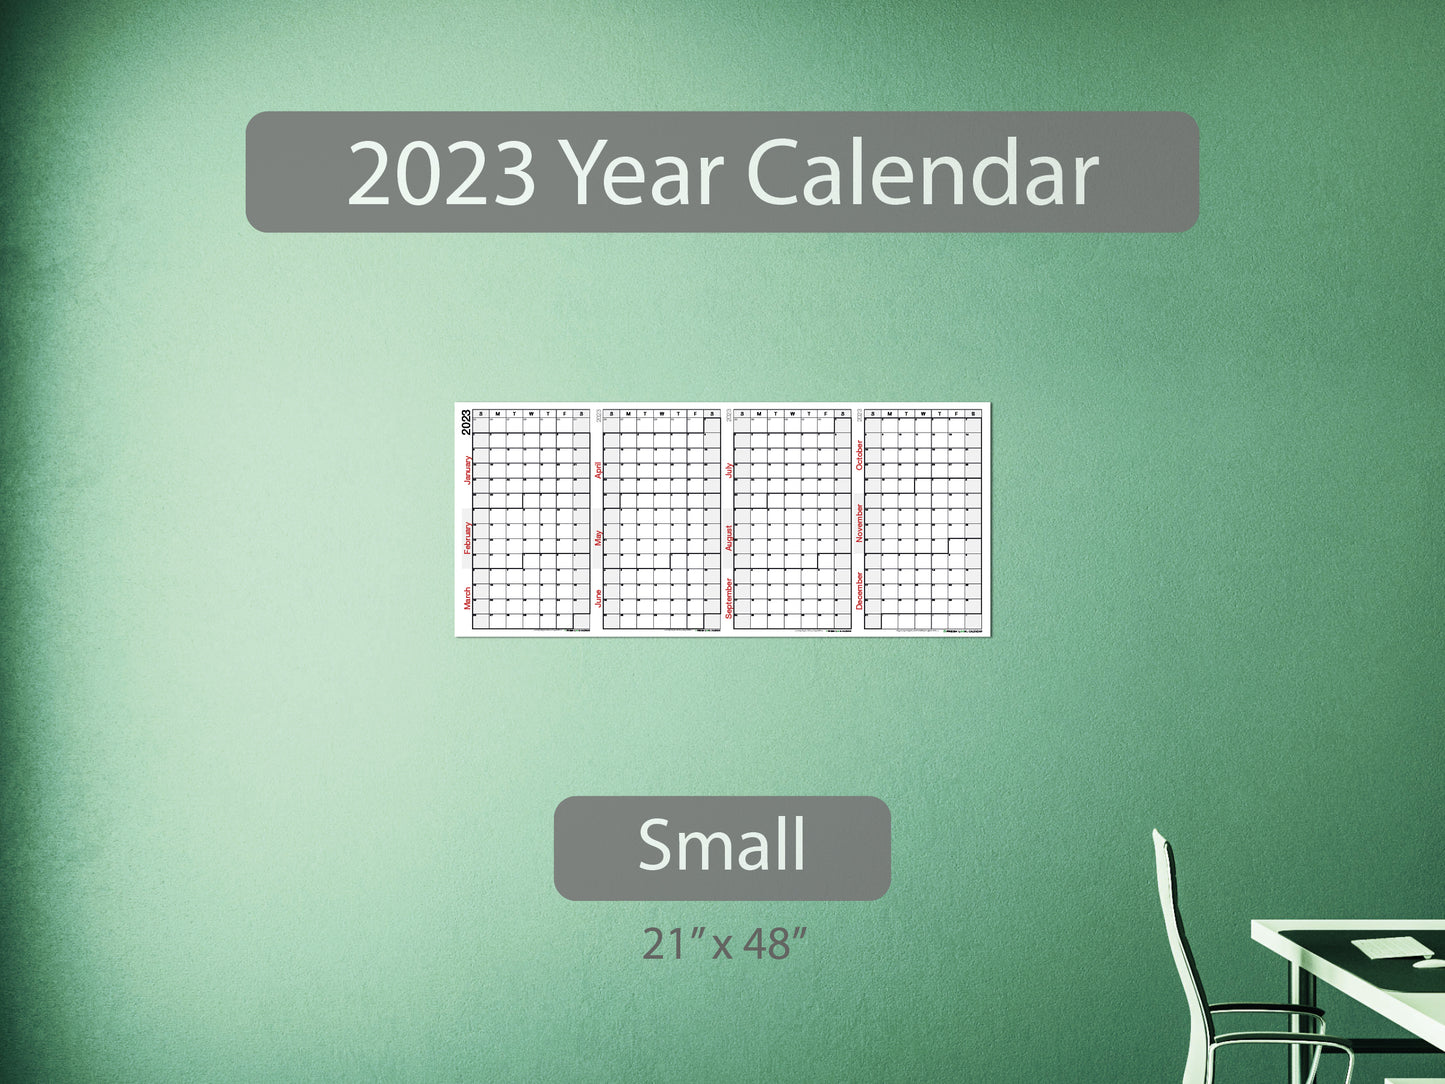 2023 Year Calendar Small